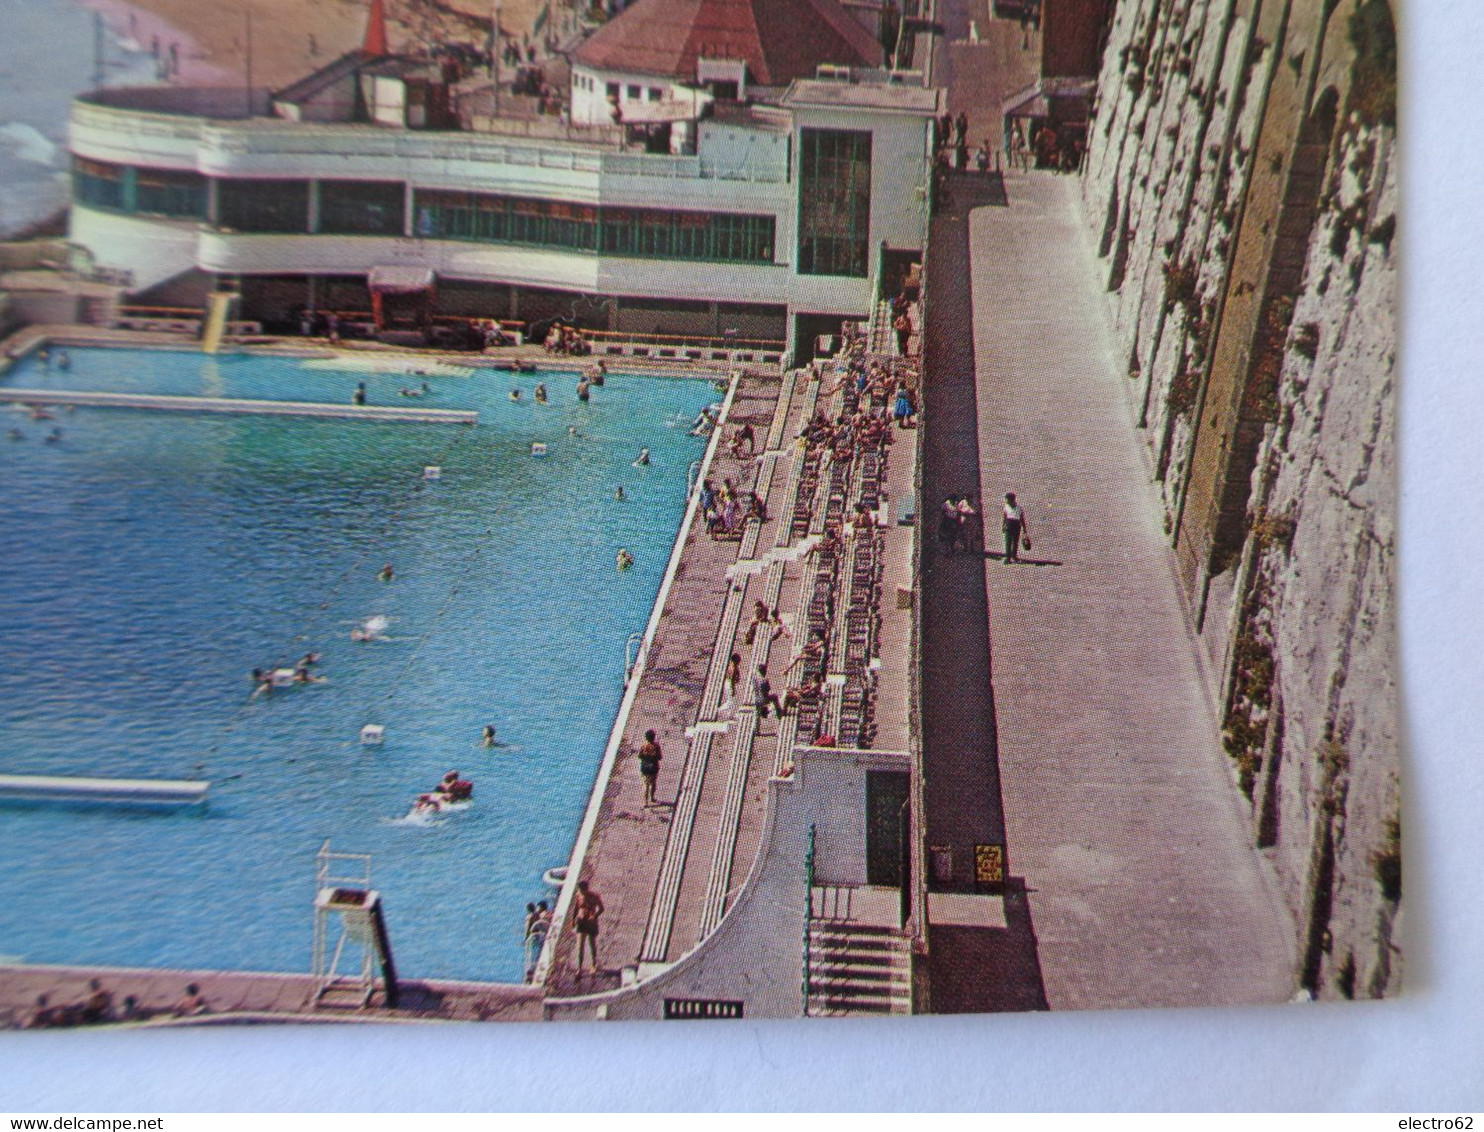 Angleterre Bathing pool Ramsgate au dos  pub. by Walter S.Bone Ltd Maidstone made in USA  Royaume-Uni  Great Briain UK